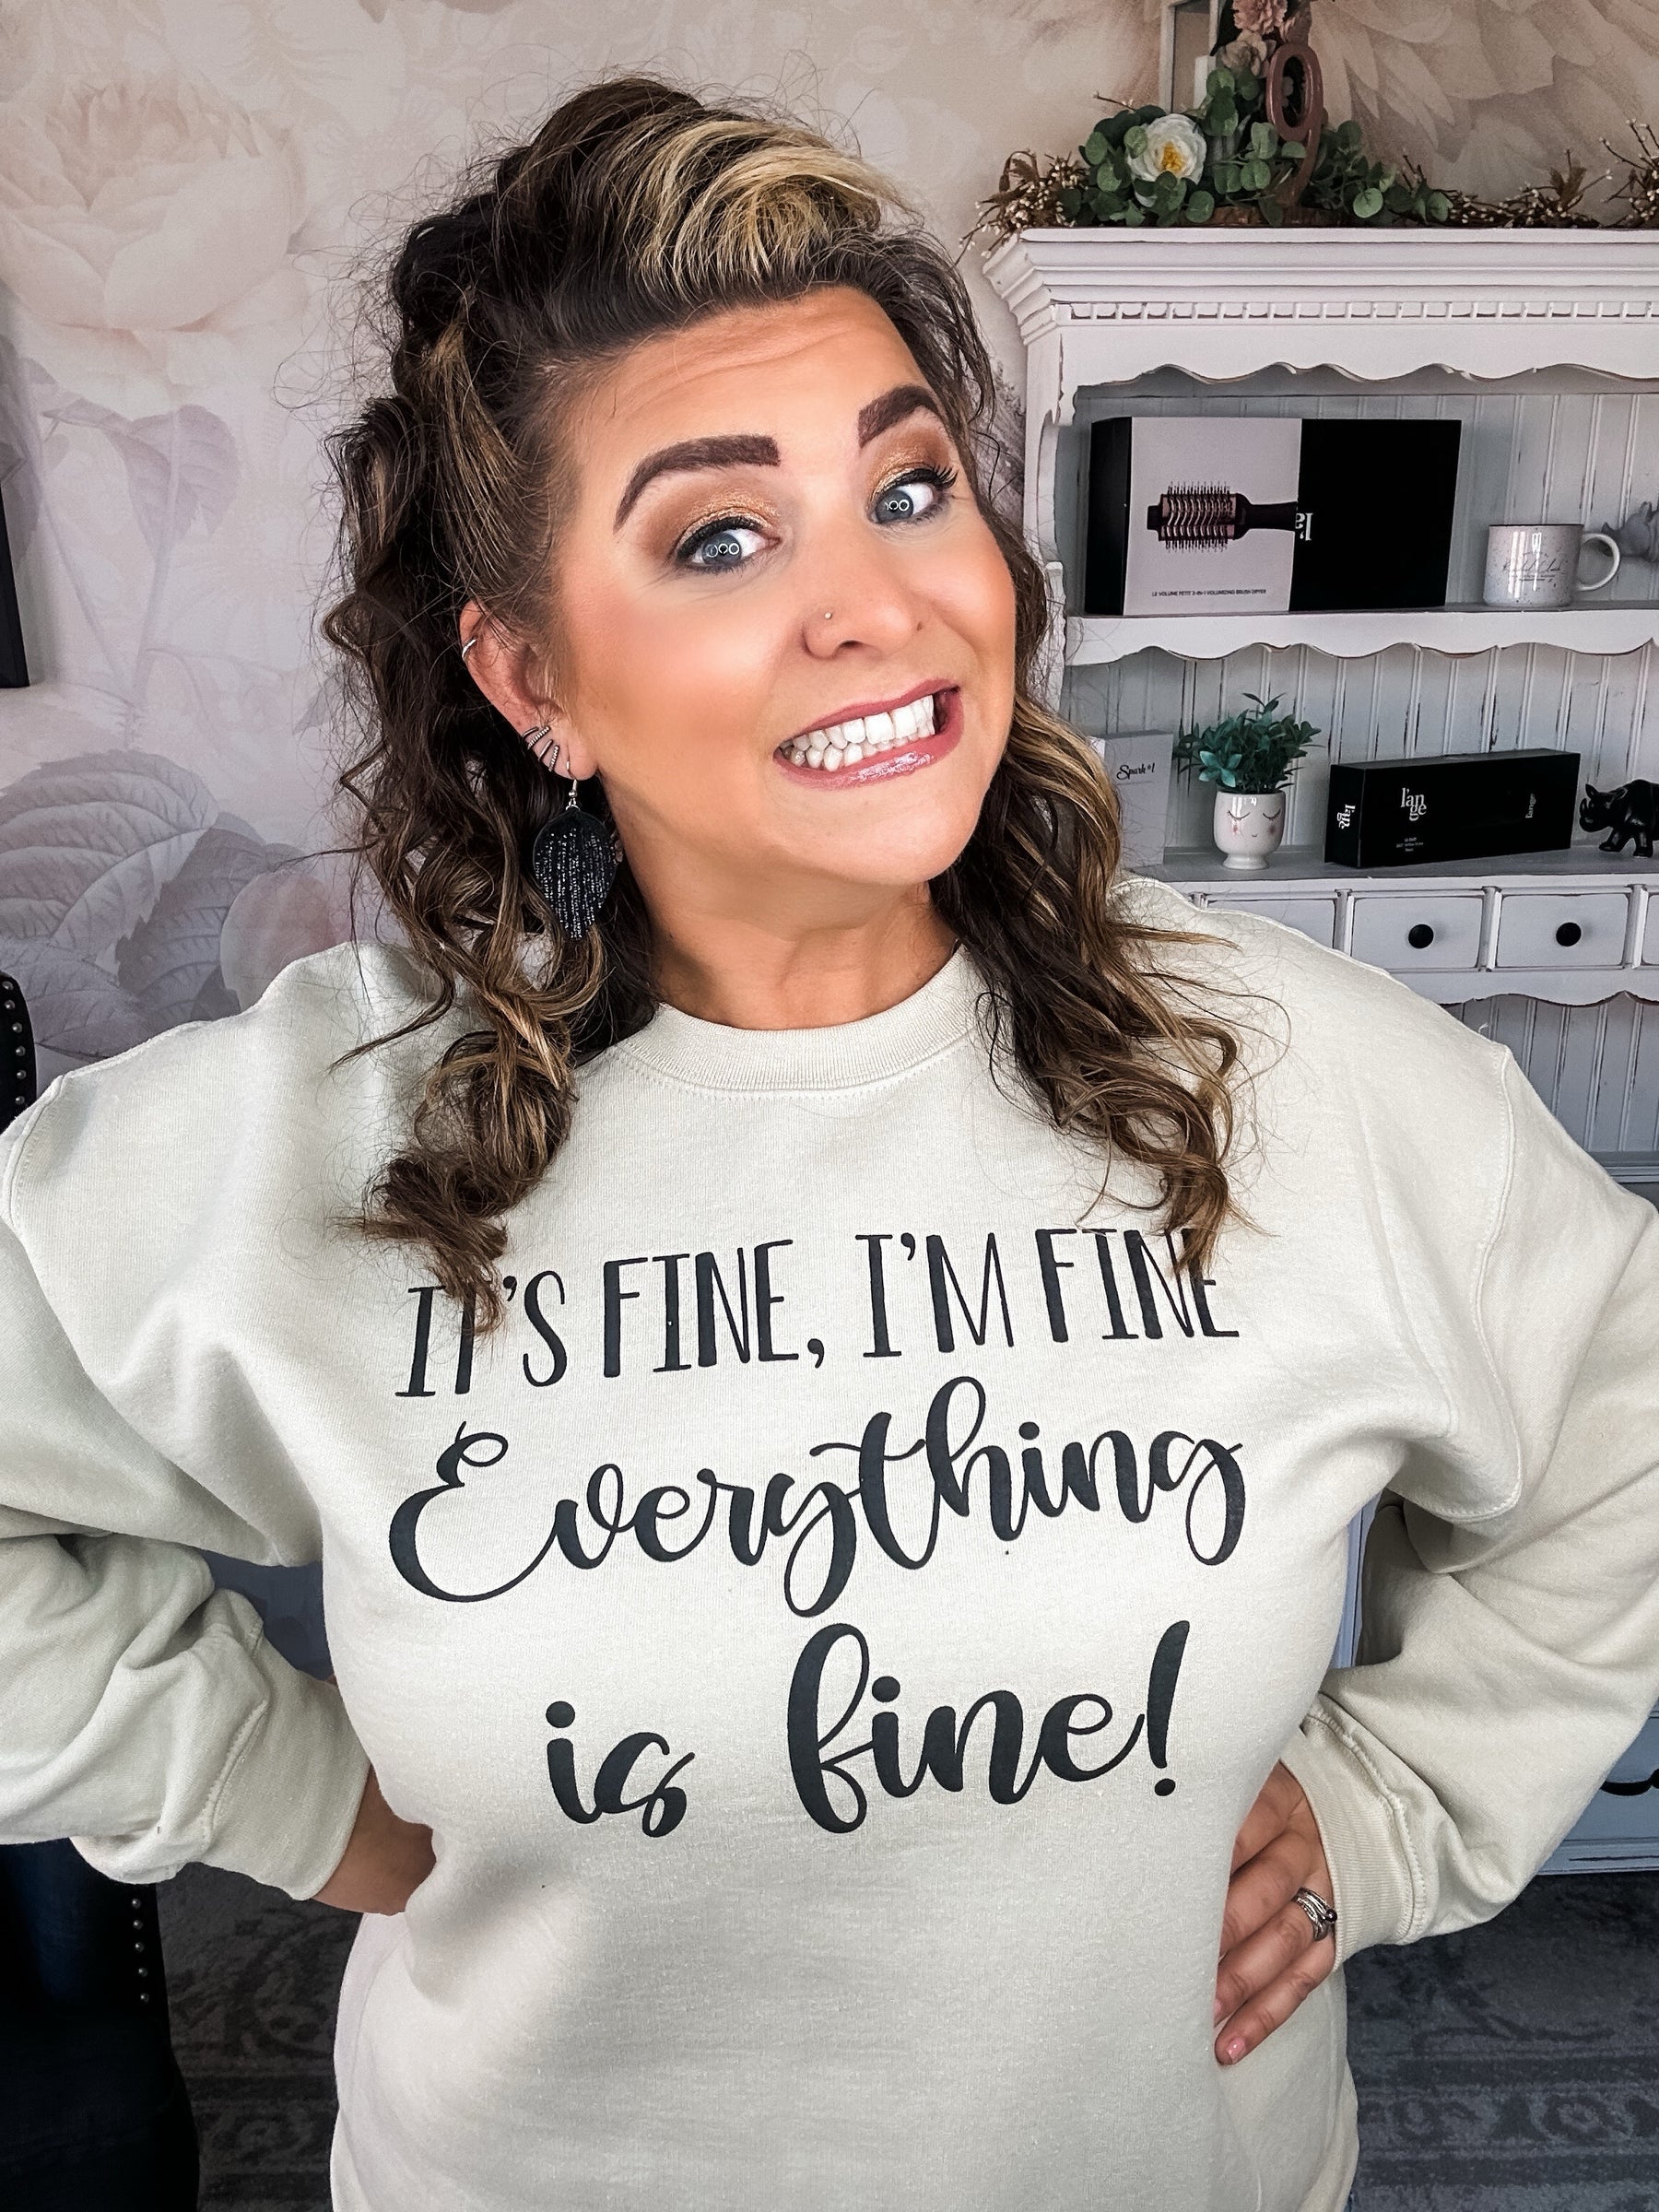 Everything Is Fine Sweatshirt